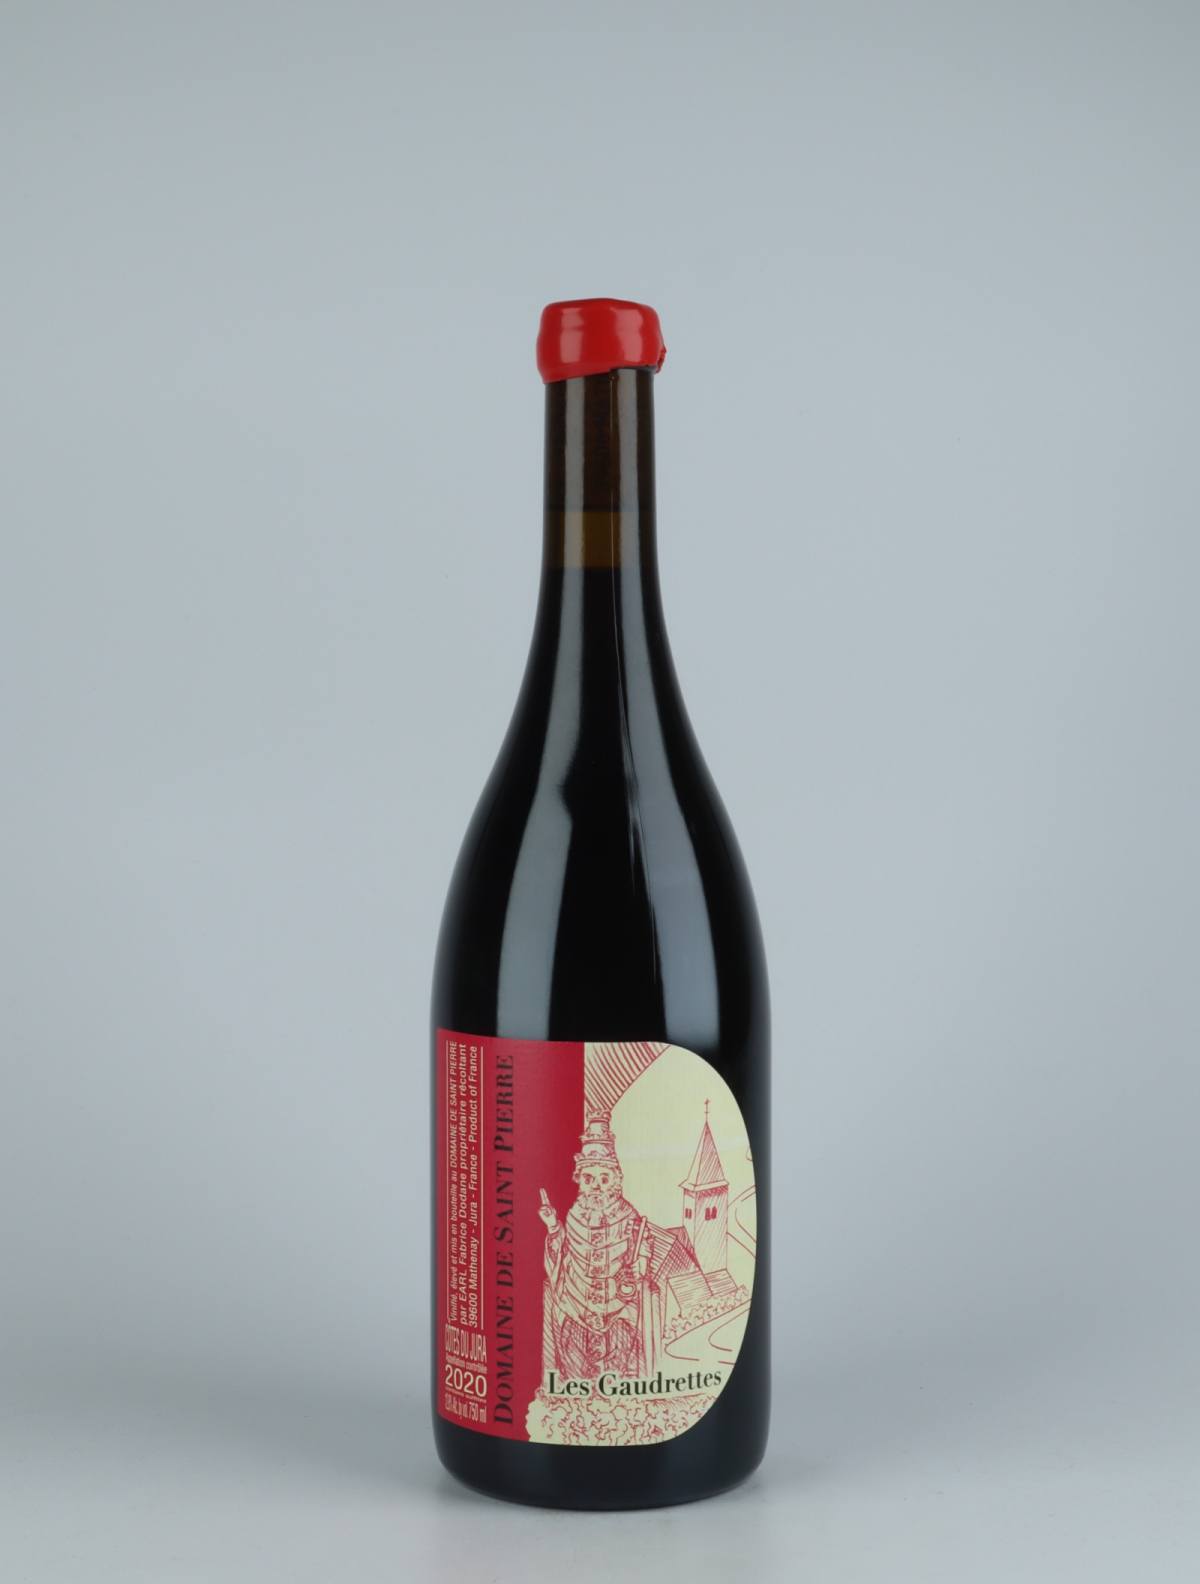 En flaske 2020 Côtes du Jura Rouge - Les Gaudrettes Rødvin fra Domaine de Saint Pierre, Jura i Frankrig